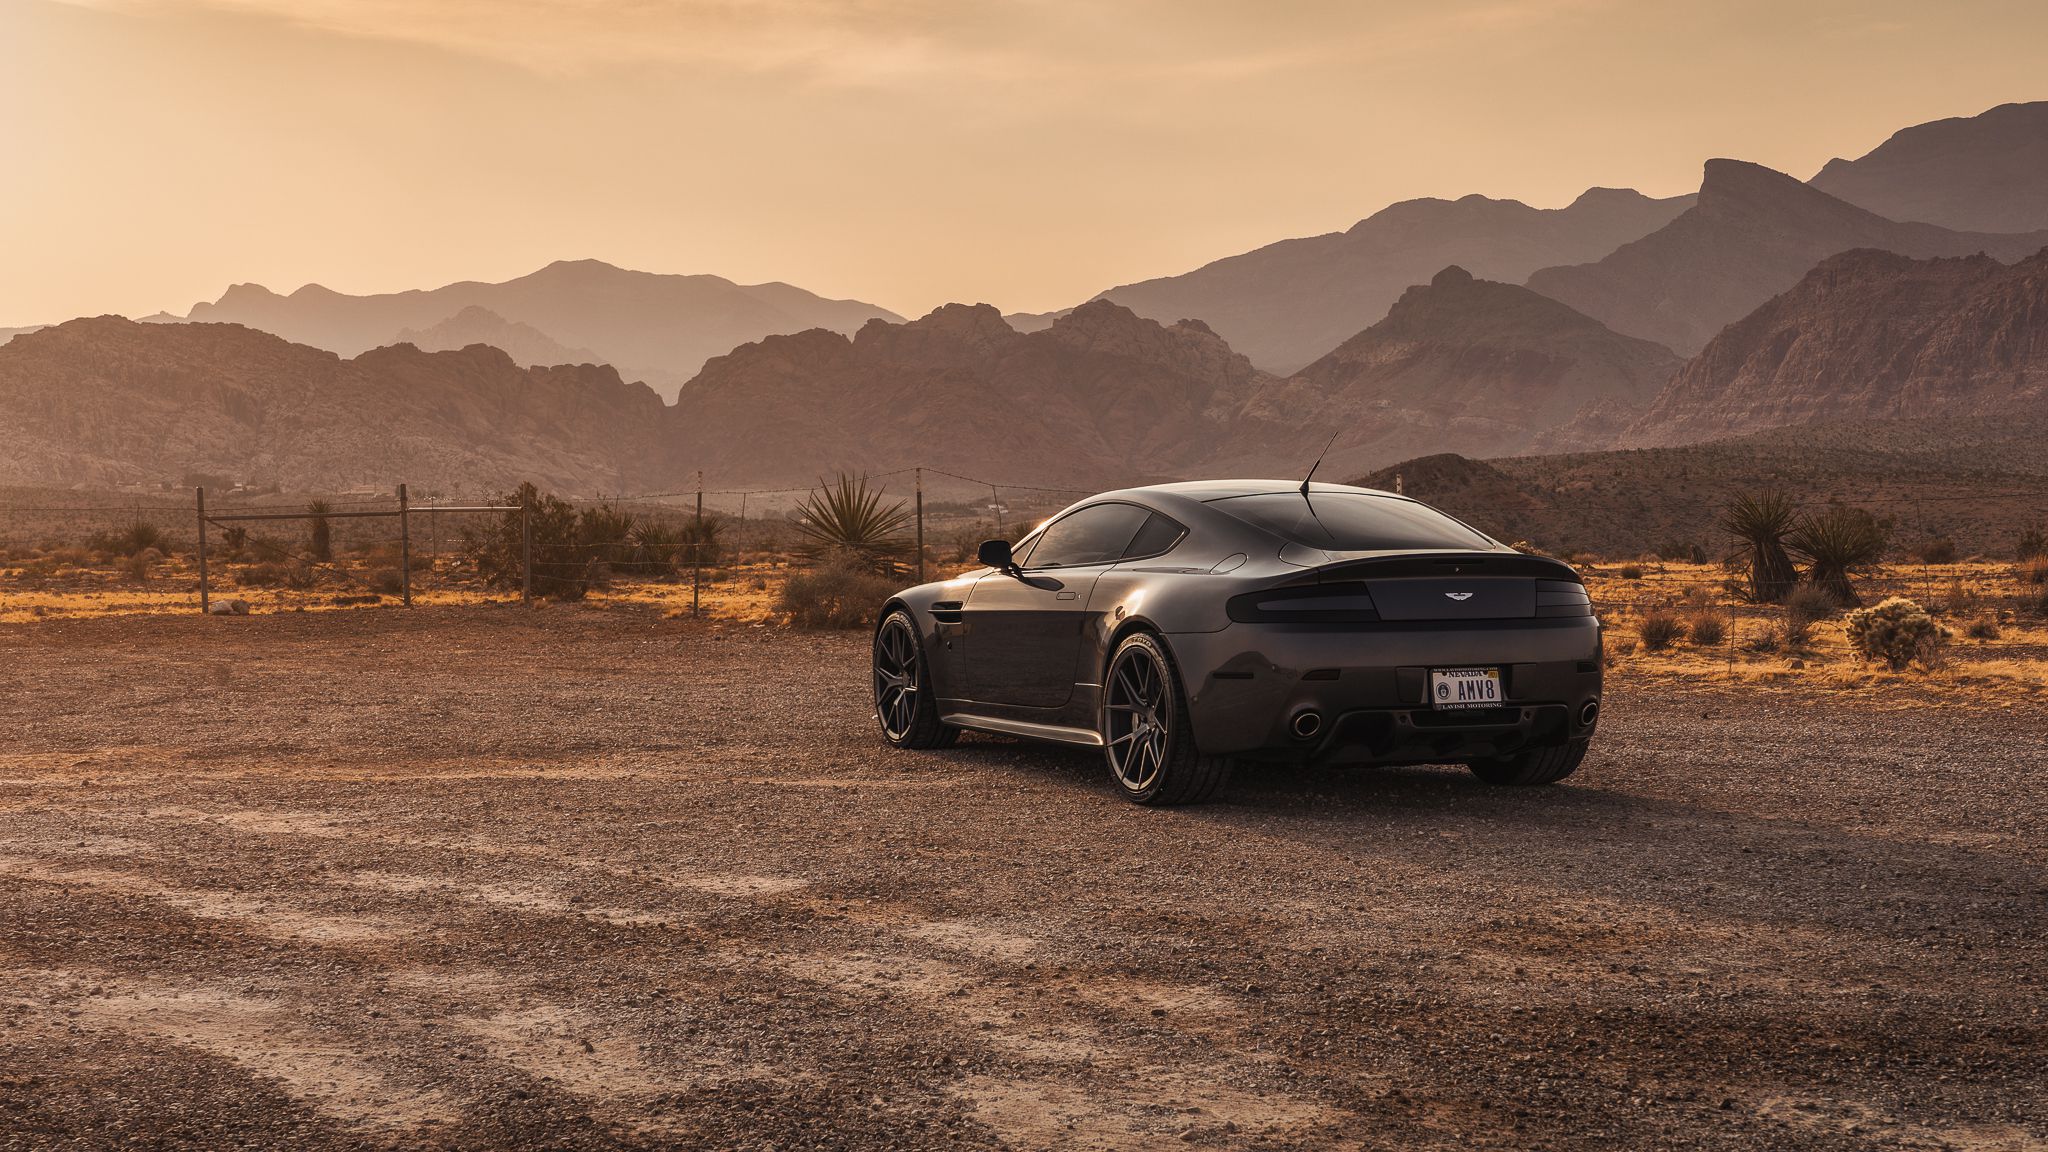 Aston Martin At Canyon Background HD Image